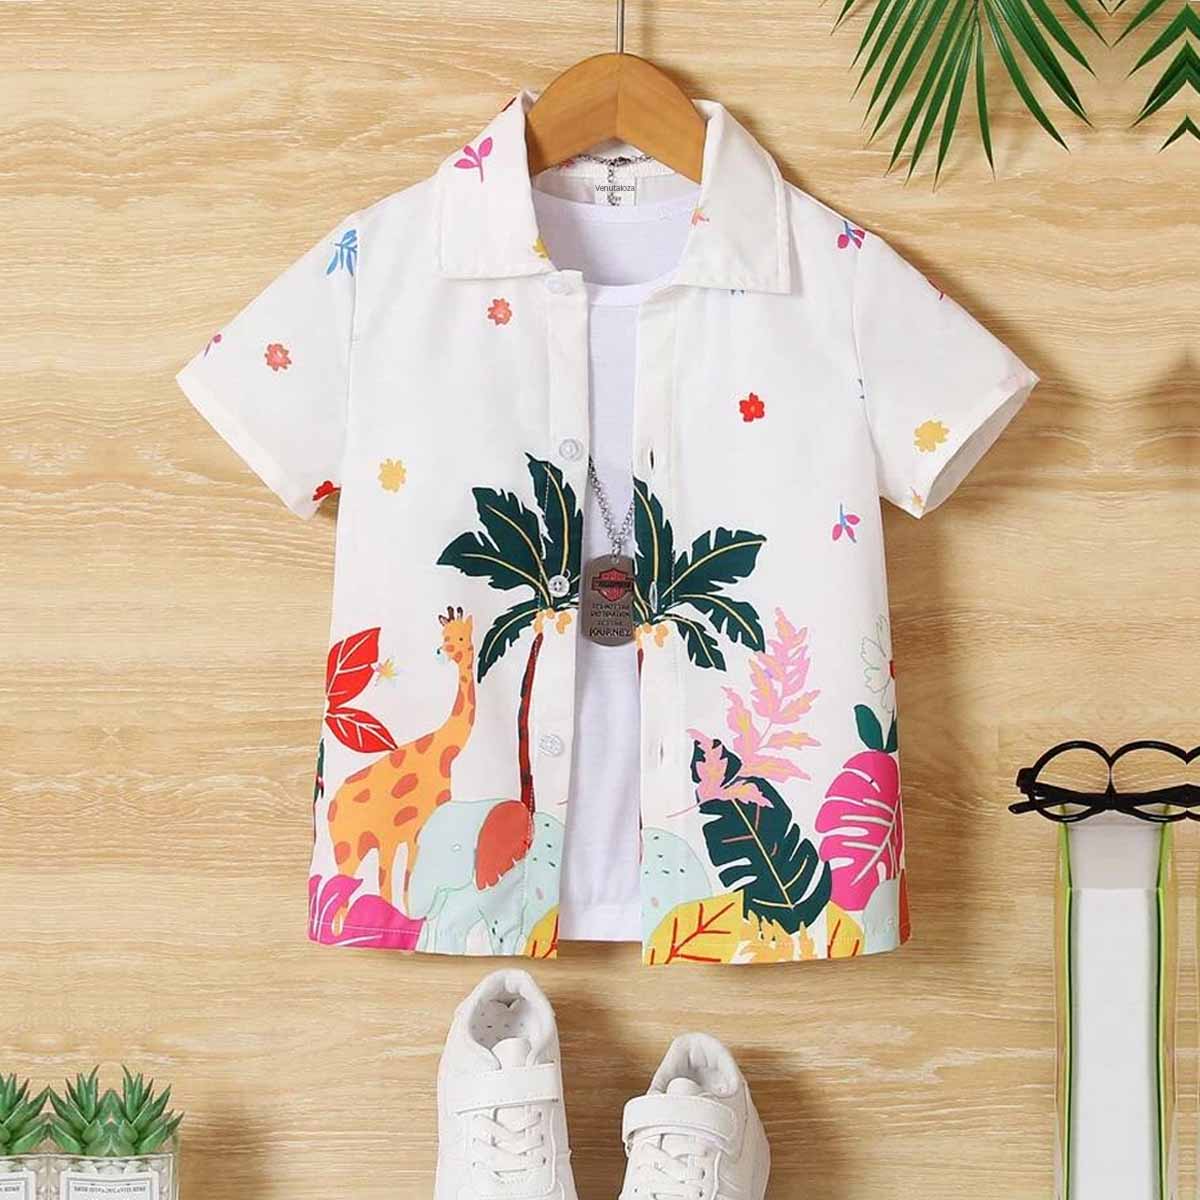 Venutaloza Boys Floral Tropical's Designer Print Button Front Shirt For Boy.